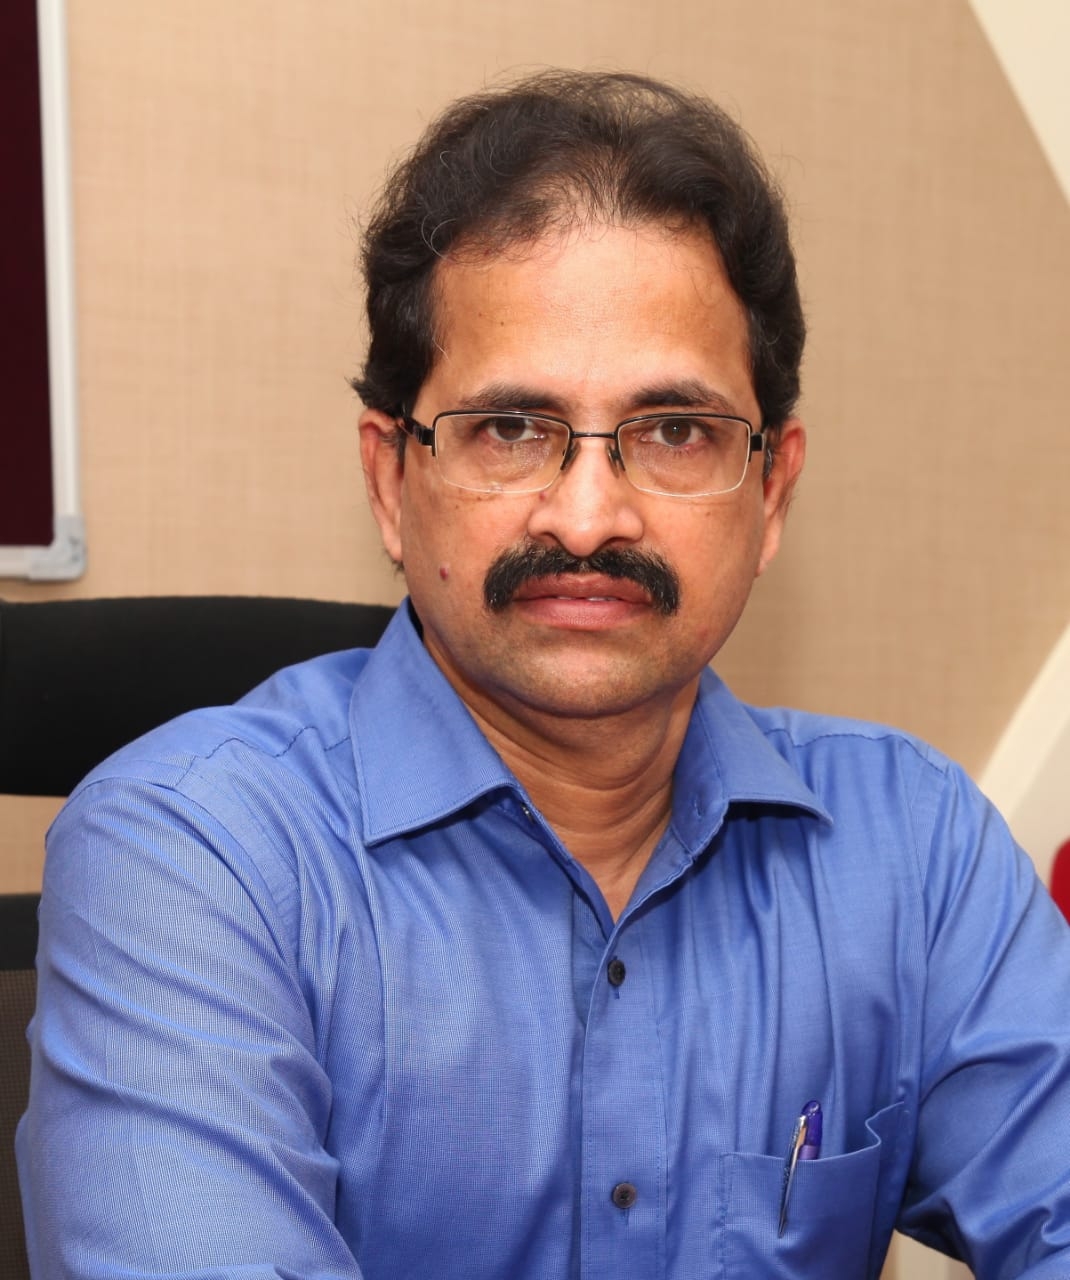 Dr. Pavan Kumar bichal